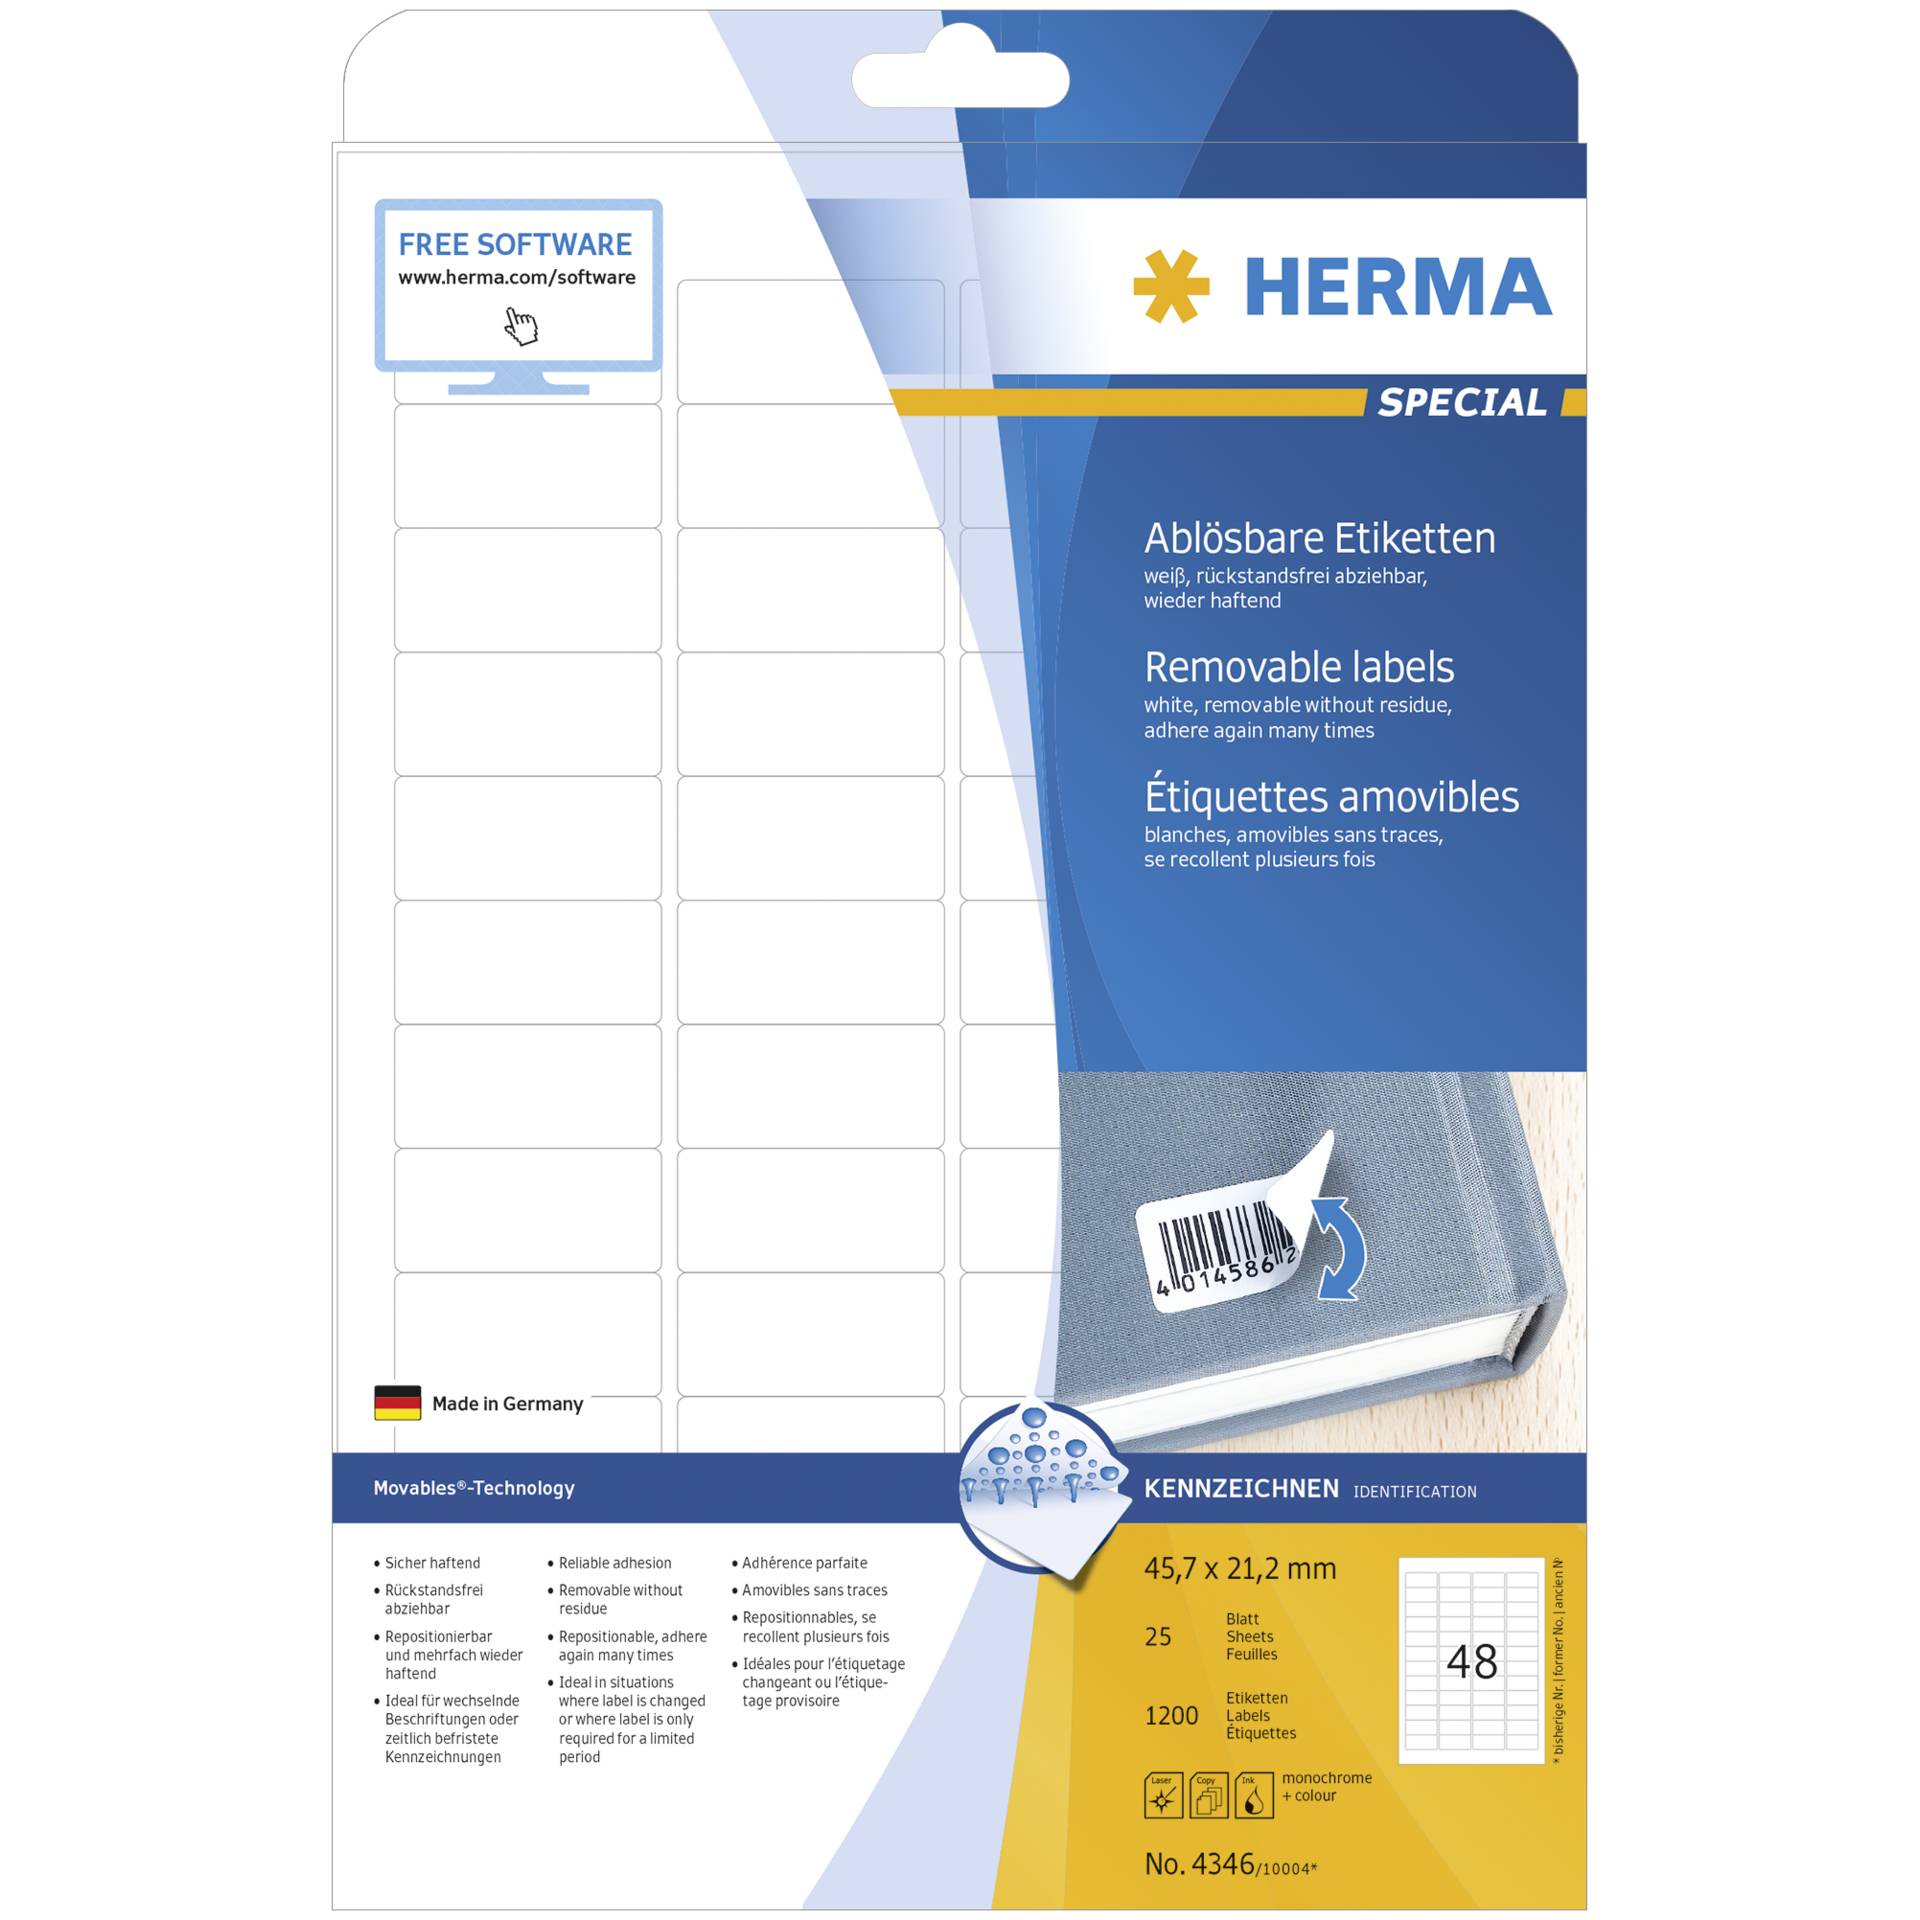 Herma Movables Etichet.45,7x21,2 25 fogli DIN A4 1200 pezzi